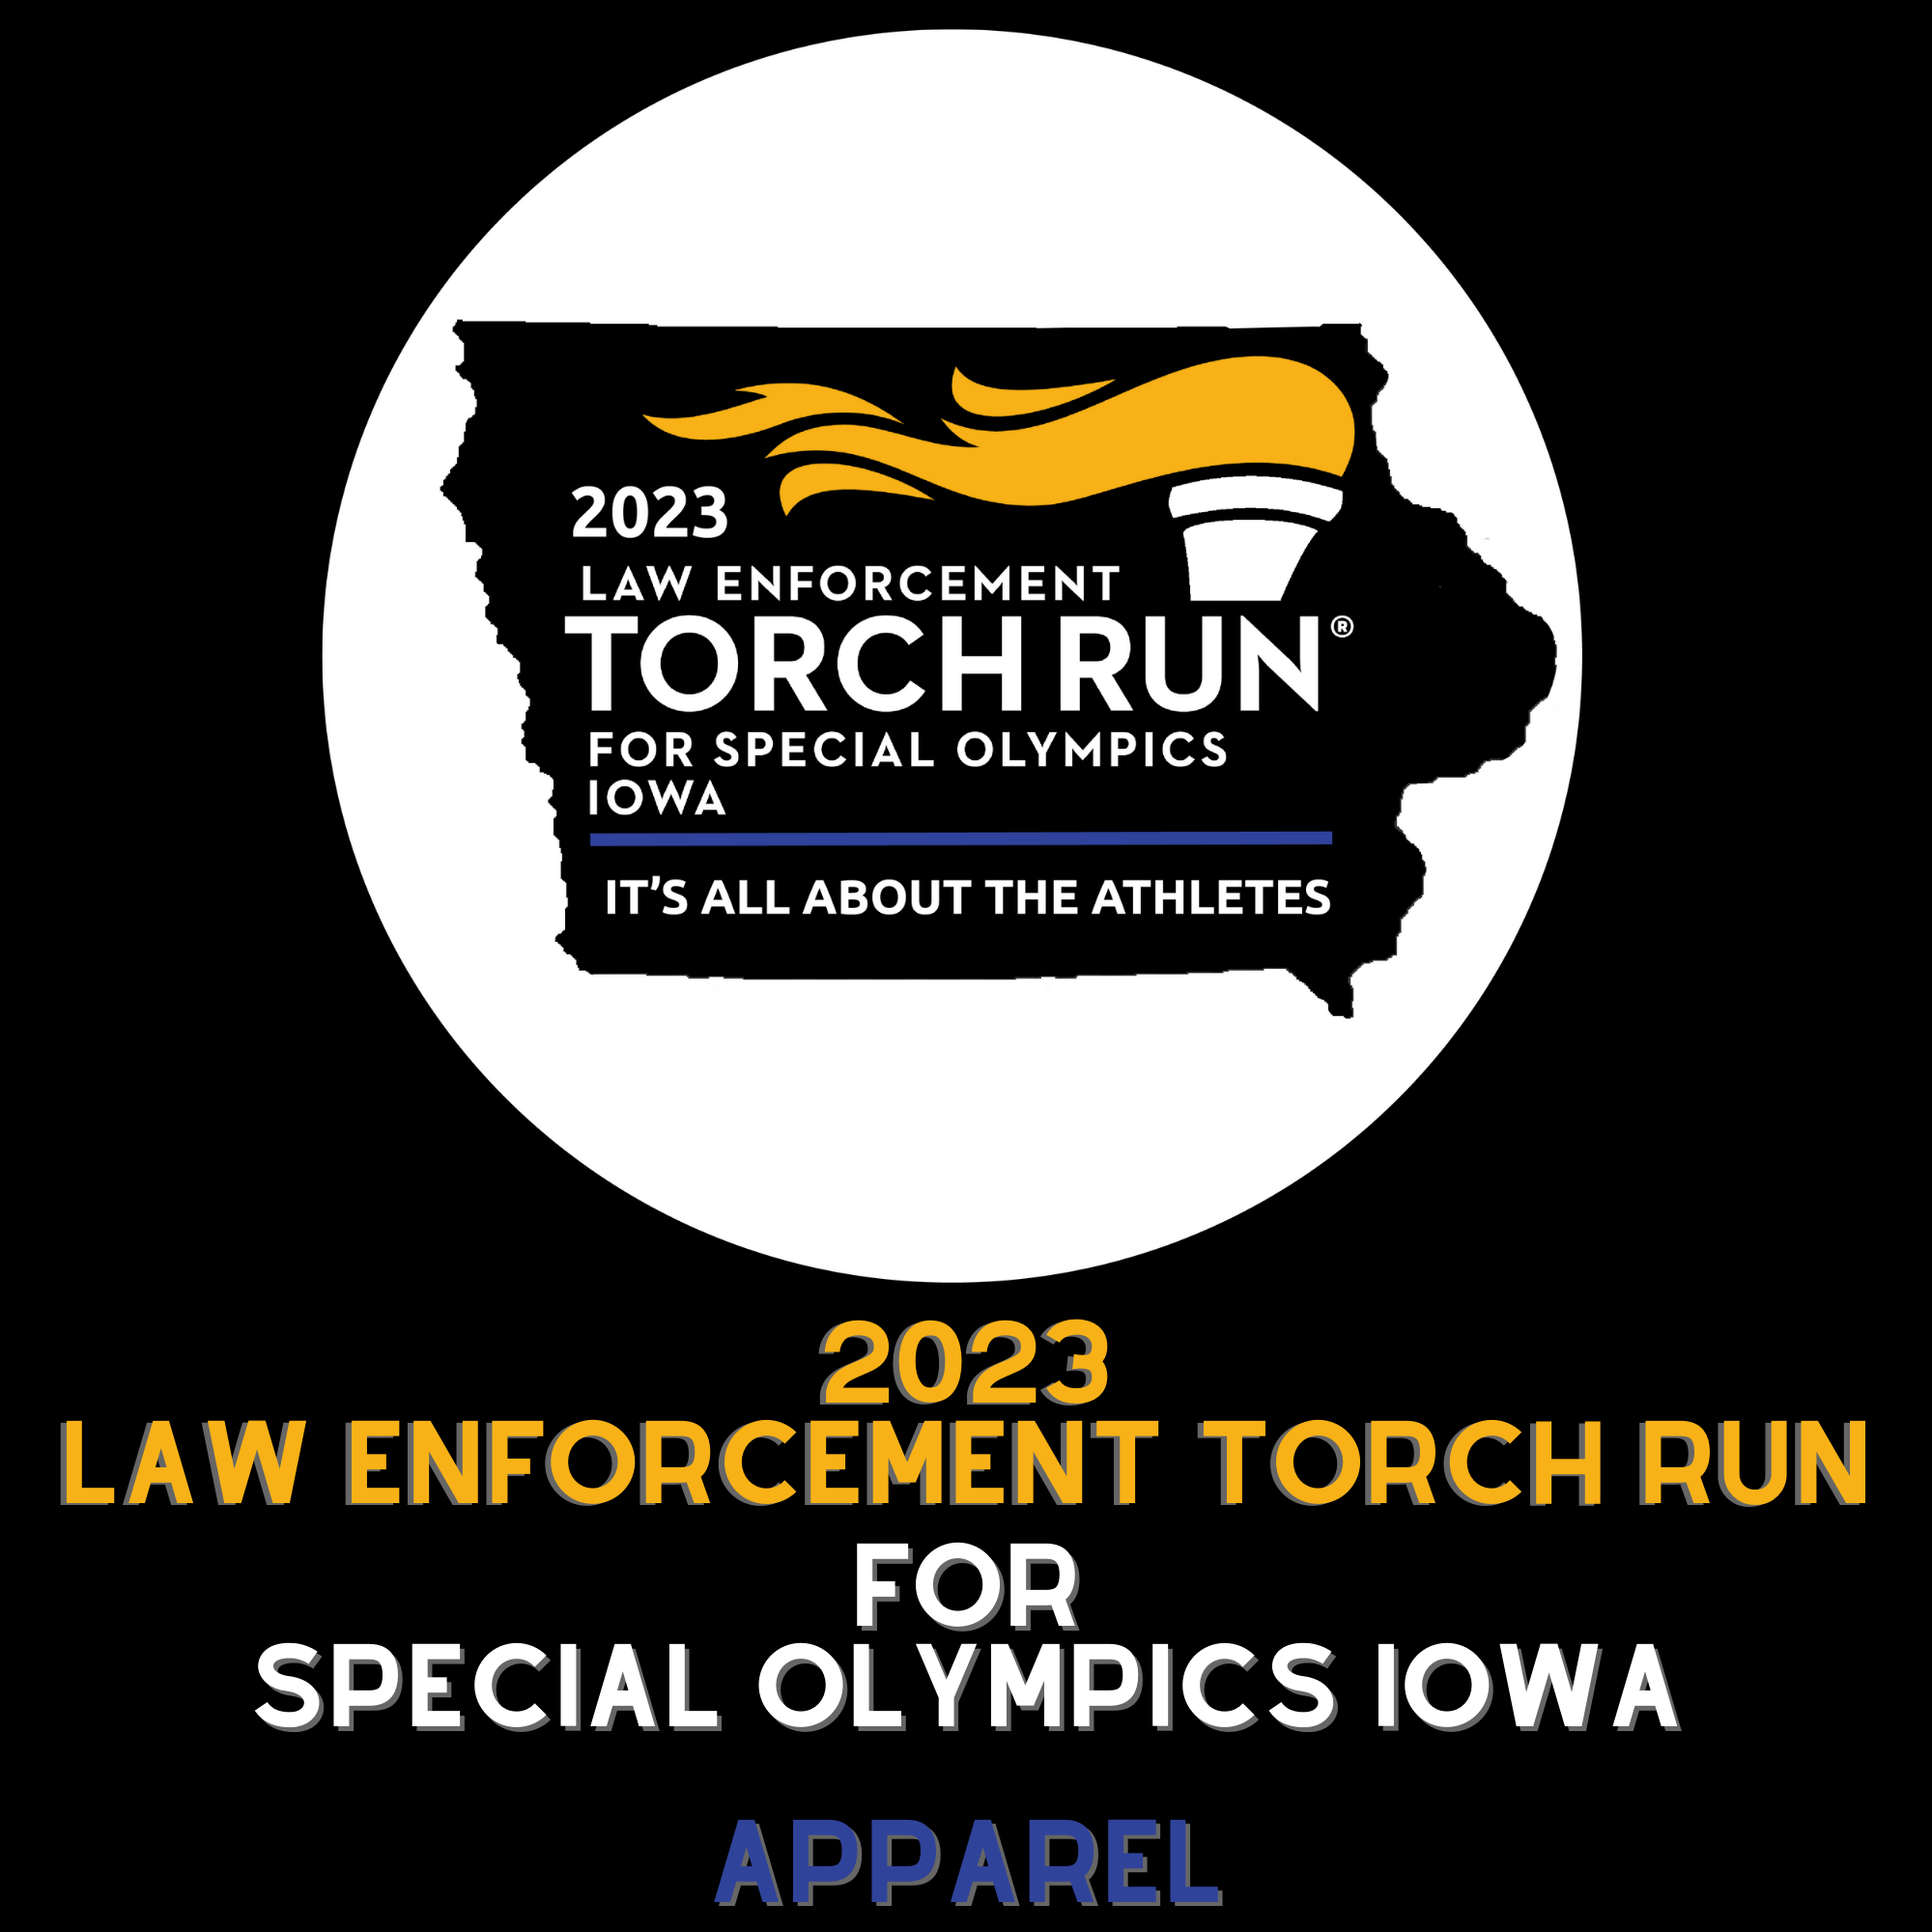 2023 Law Enforcement Torch Run Apparel Campaign